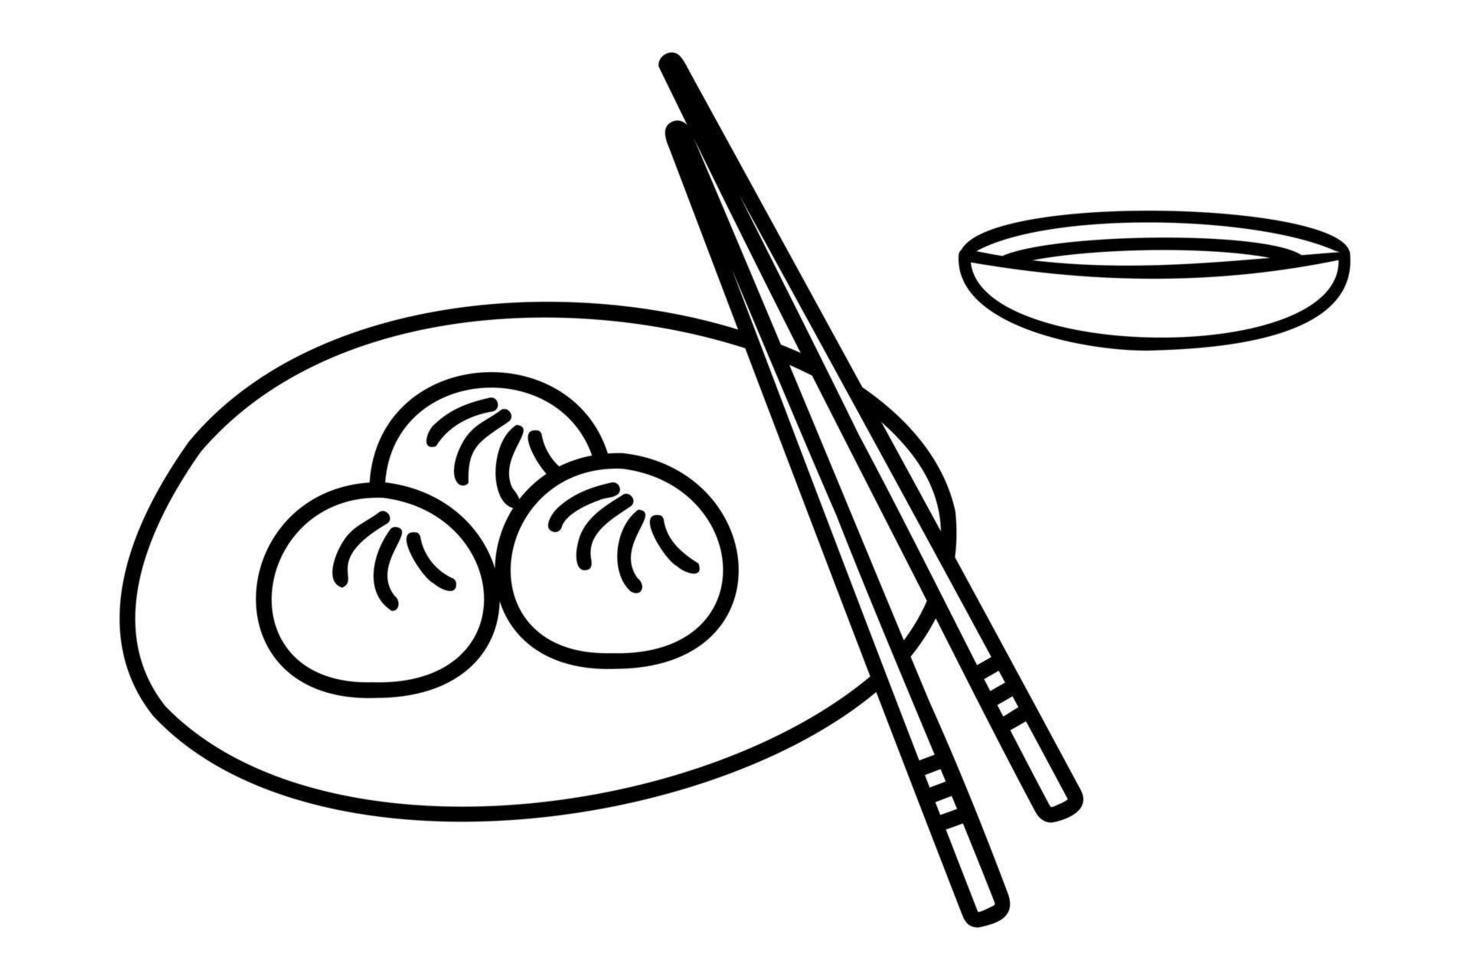 wontons kinesisk klimpar på en vit bakgrund. asiatisk mat. klotter illustration för restauranger, menyer, dekor vektor